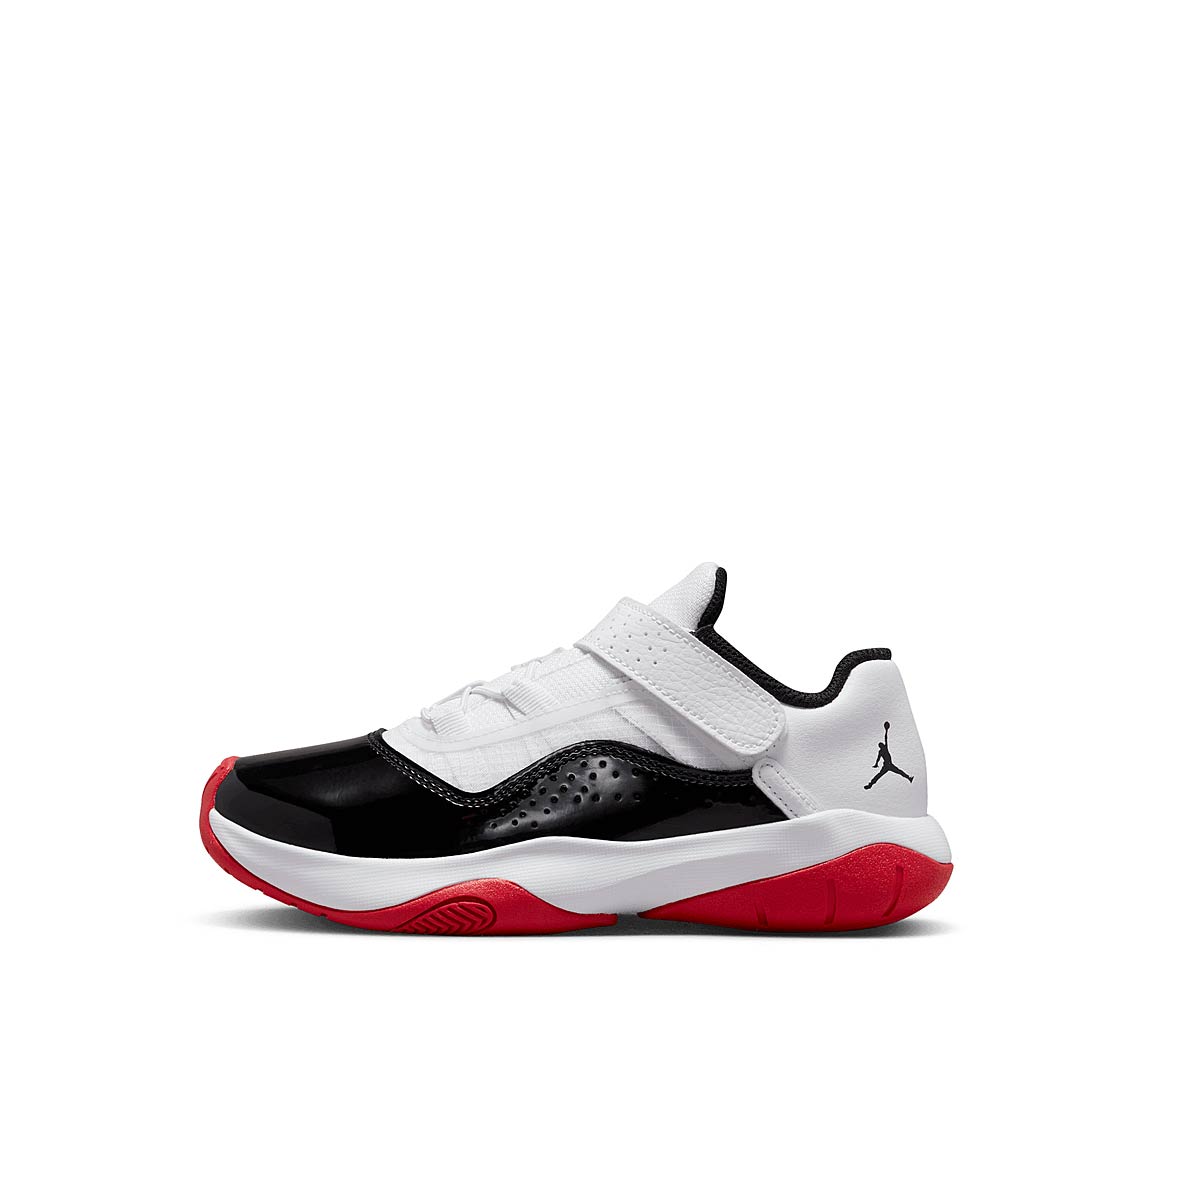 Jordan Jordan 11 Cmft Low (Ps), White/Black-University Red